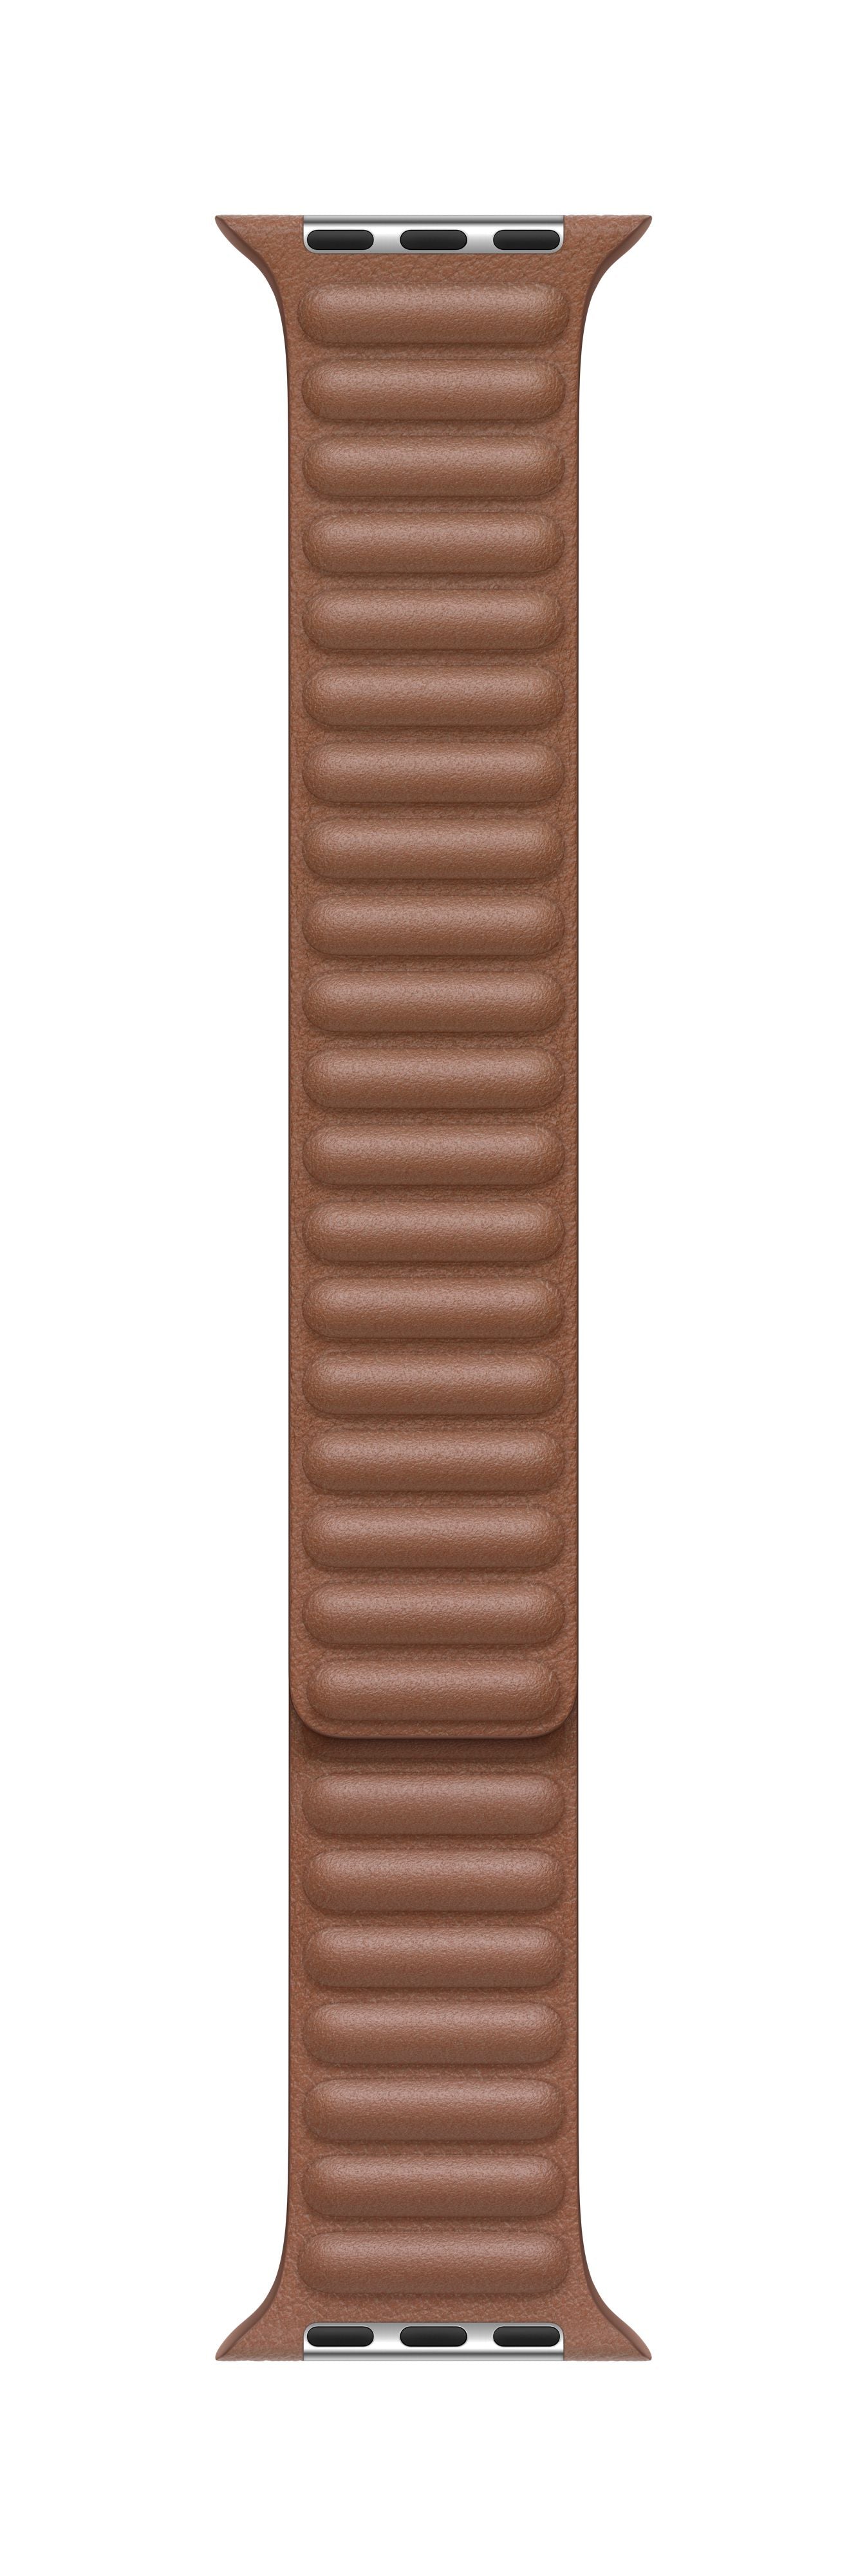 44mm Saddle Brown Leather Link - Large